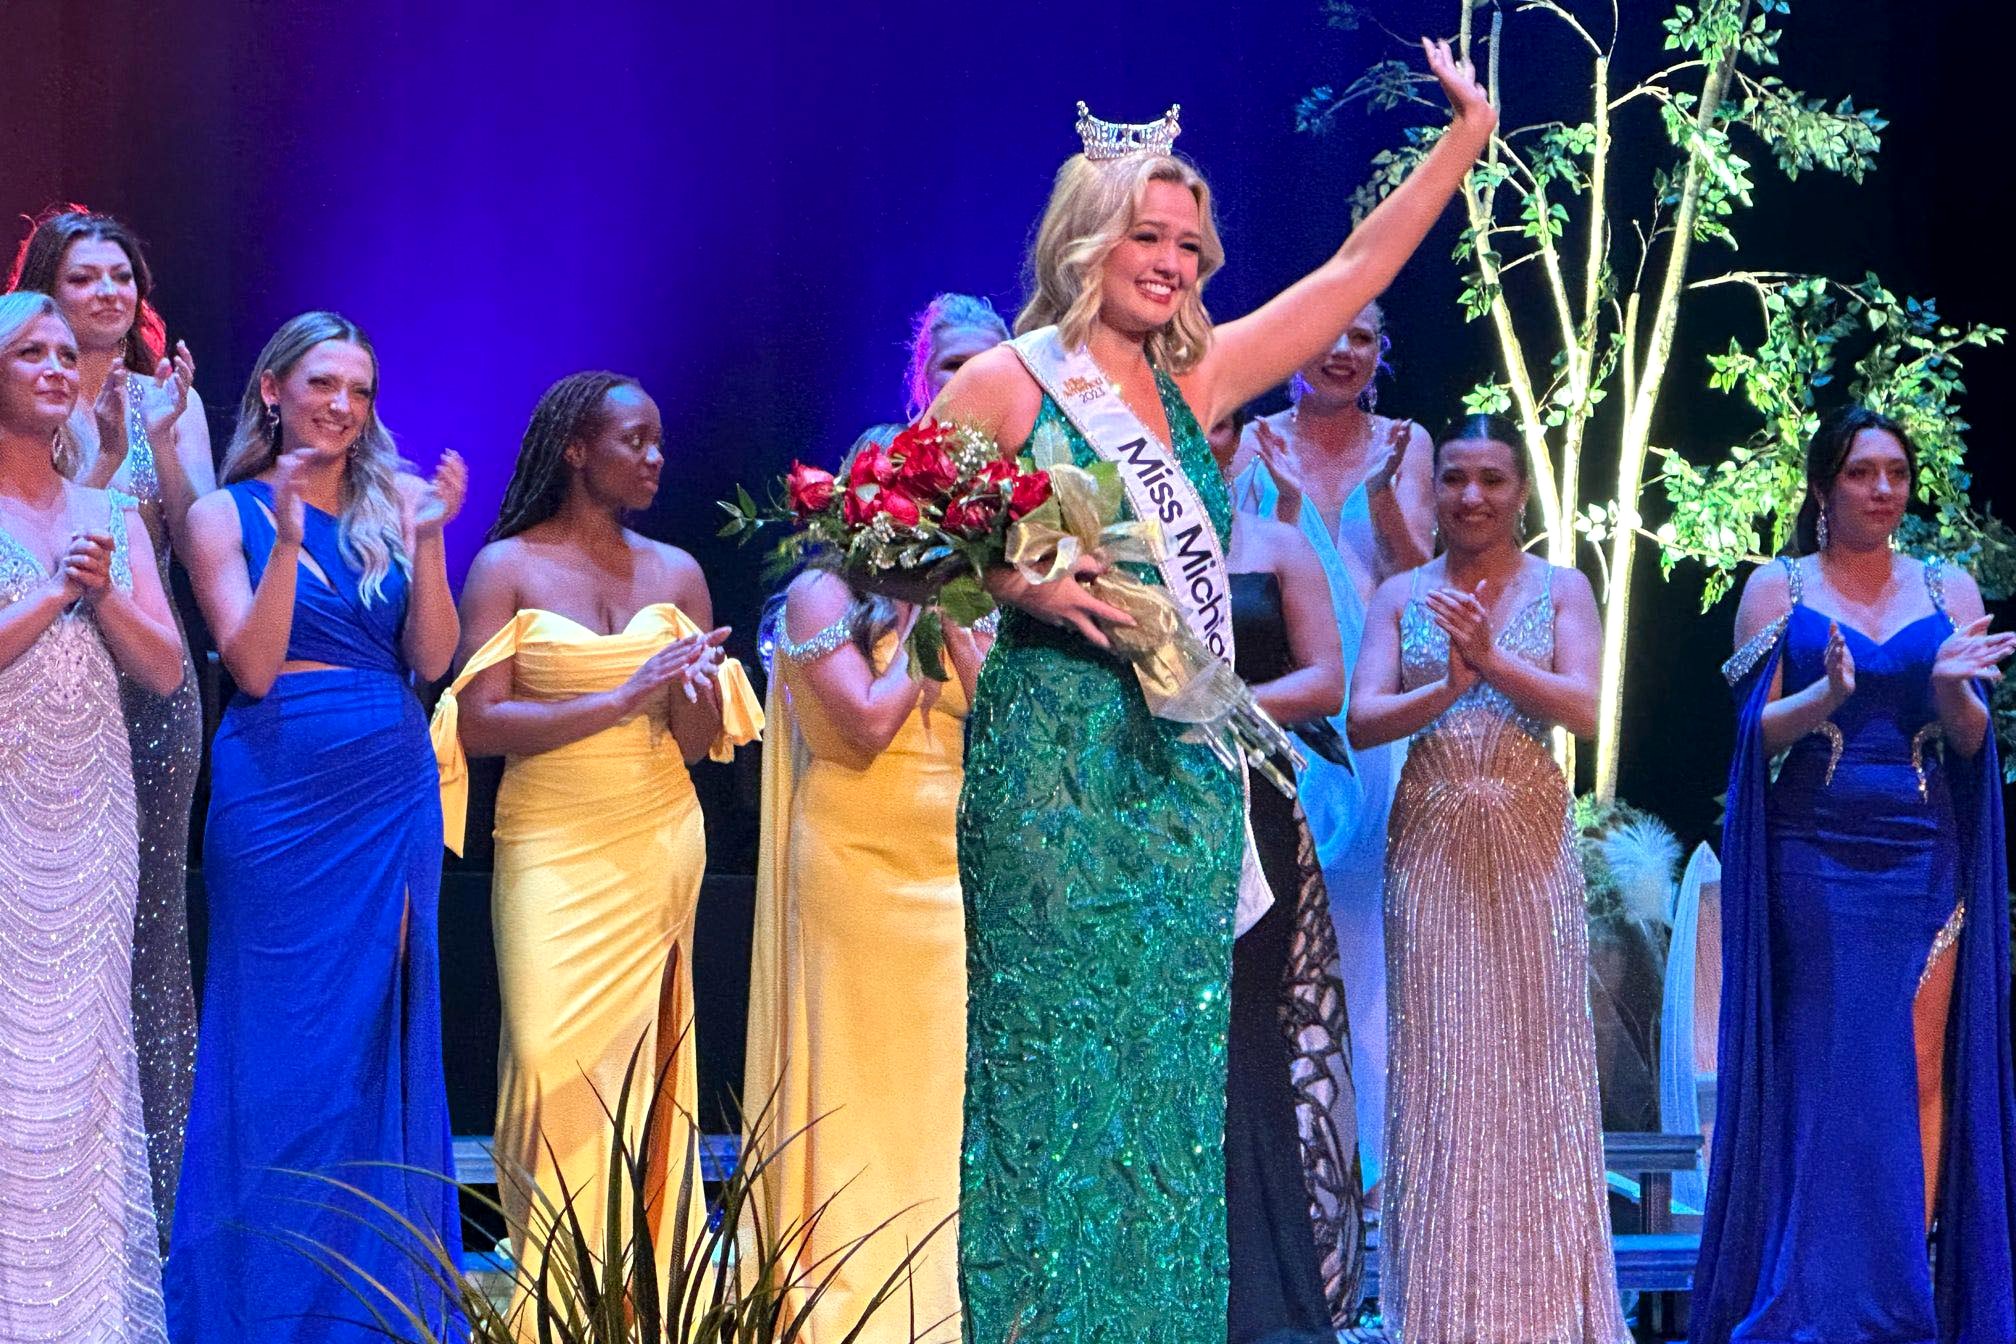 Maya Schuhknecht winning Miss Michigan, wearing green dress with sash and crown.